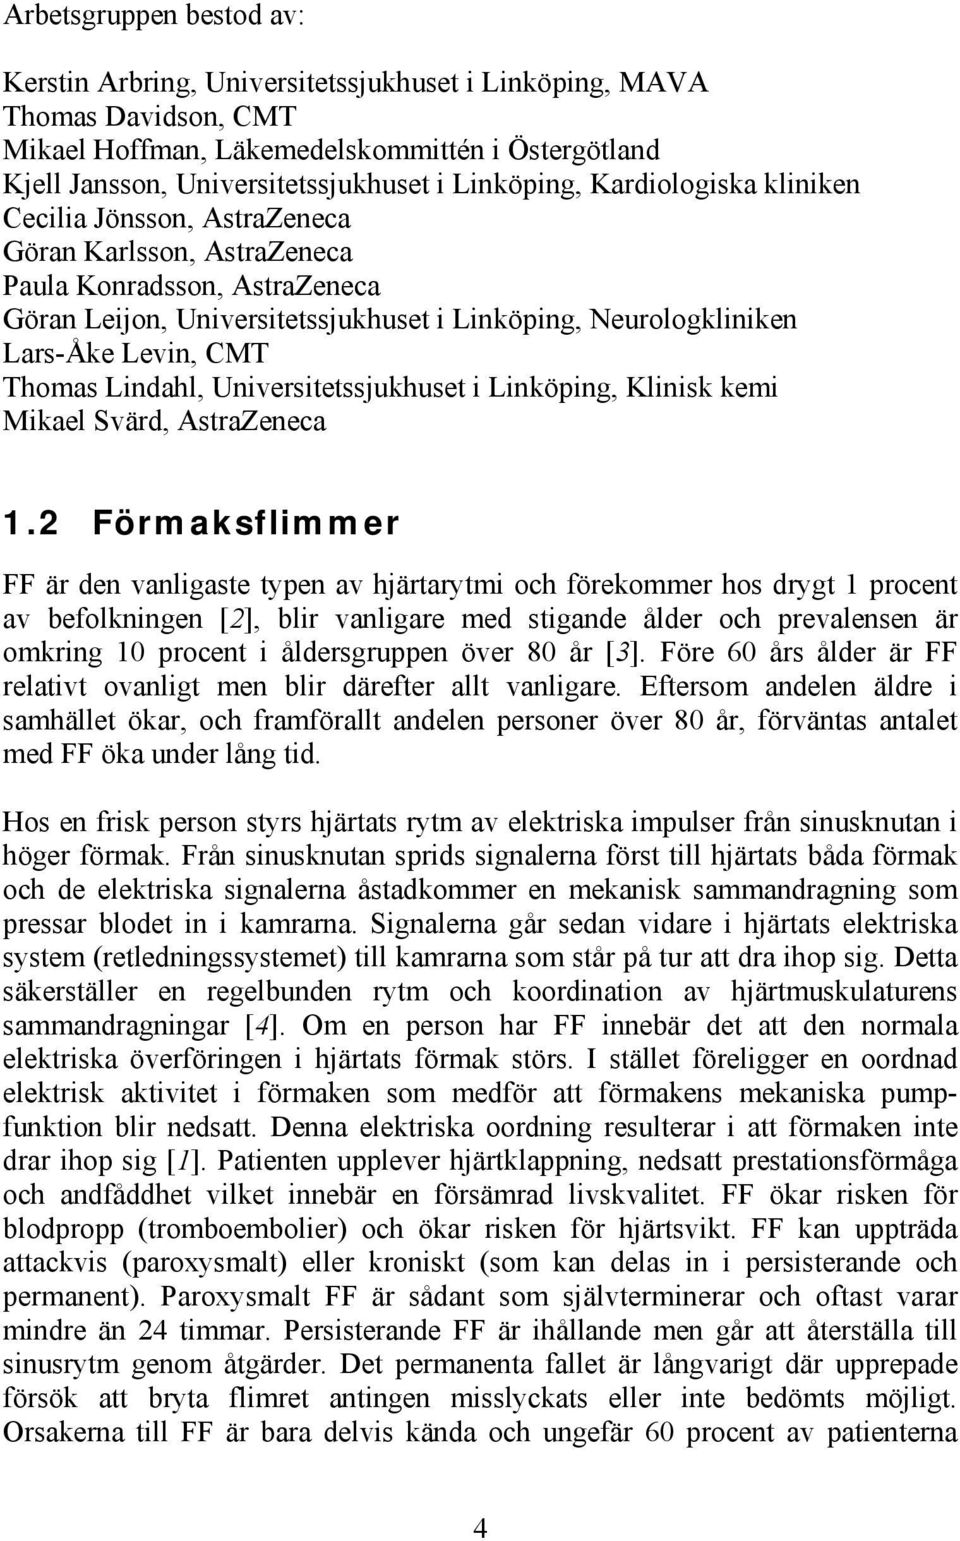 Levin, CMT Thomas Lindahl, Universitetssjukhuset i Linköping, Klinisk kemi Mikael Svärd, AstraZeneca 1.